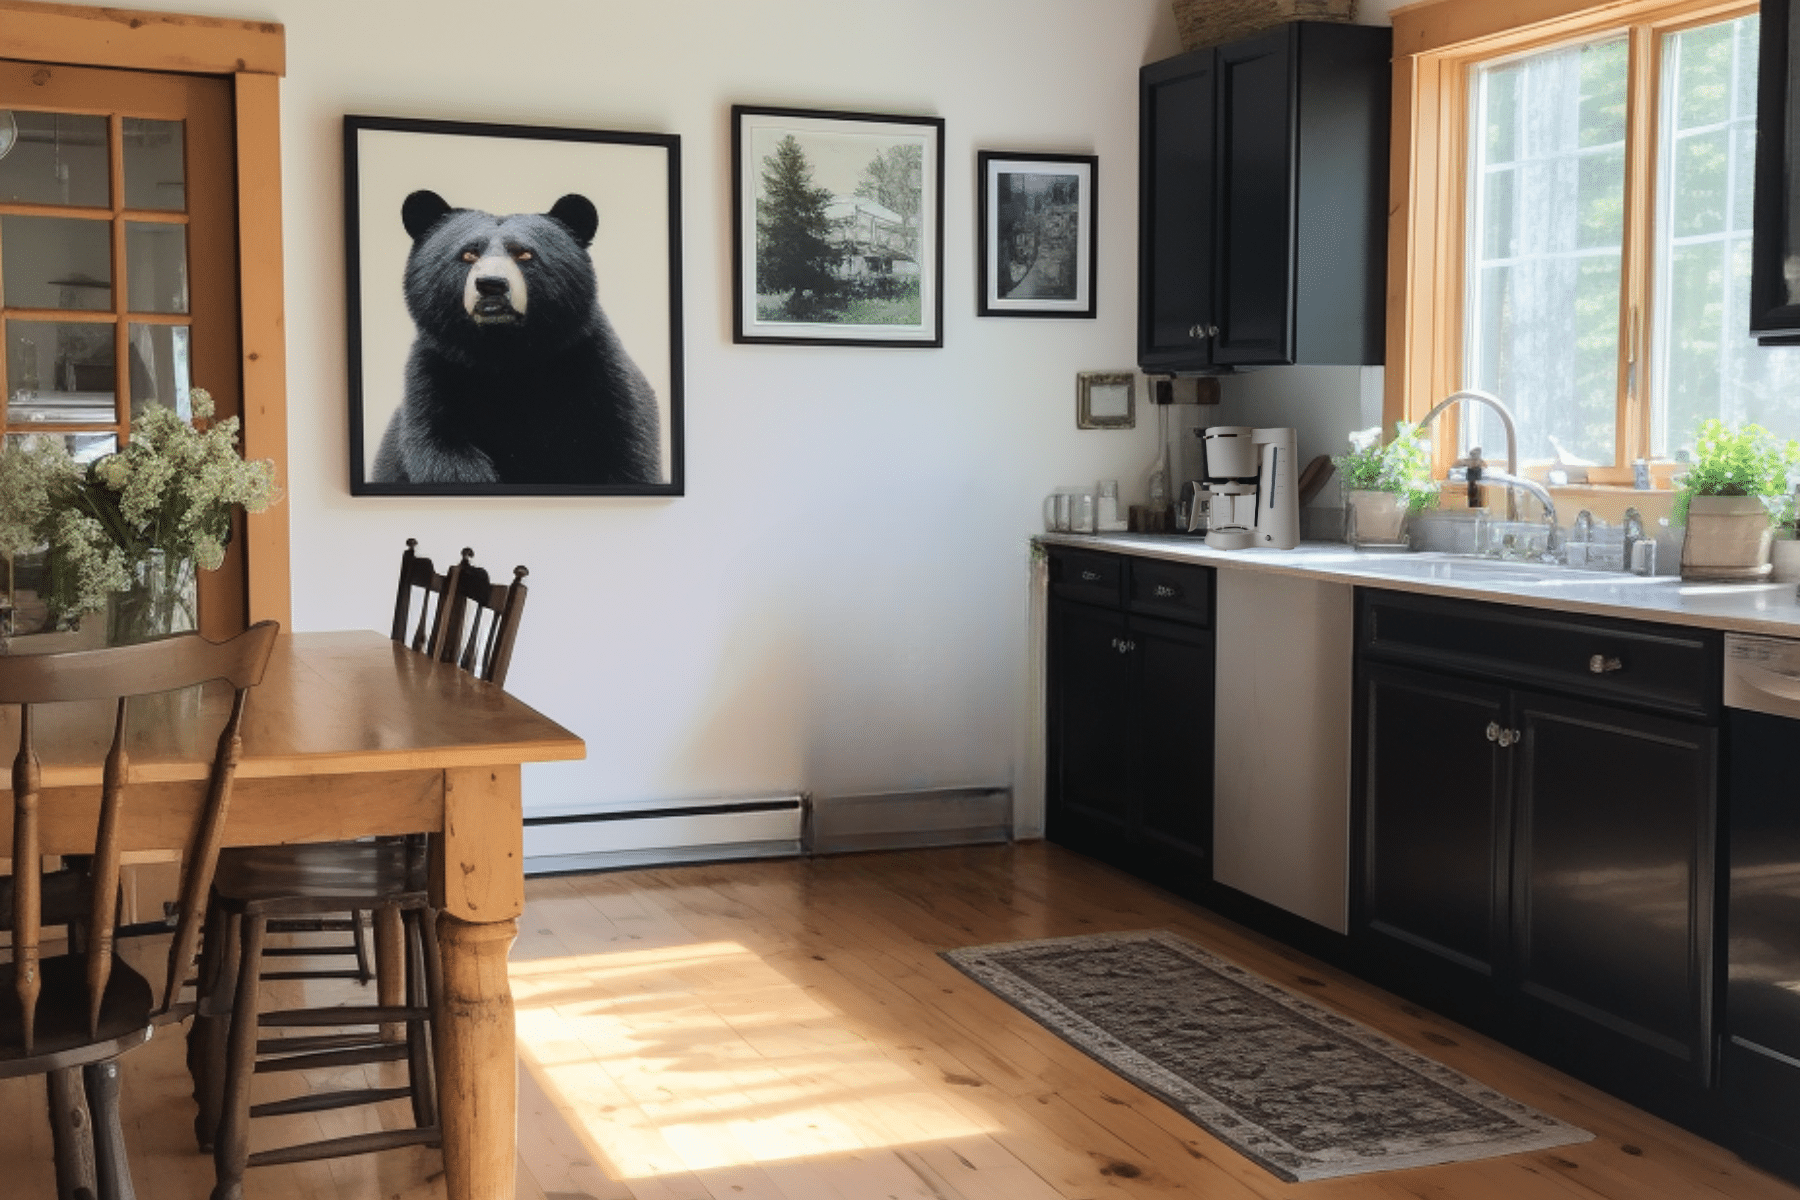 Bear Kitchen Decor Ideas rug